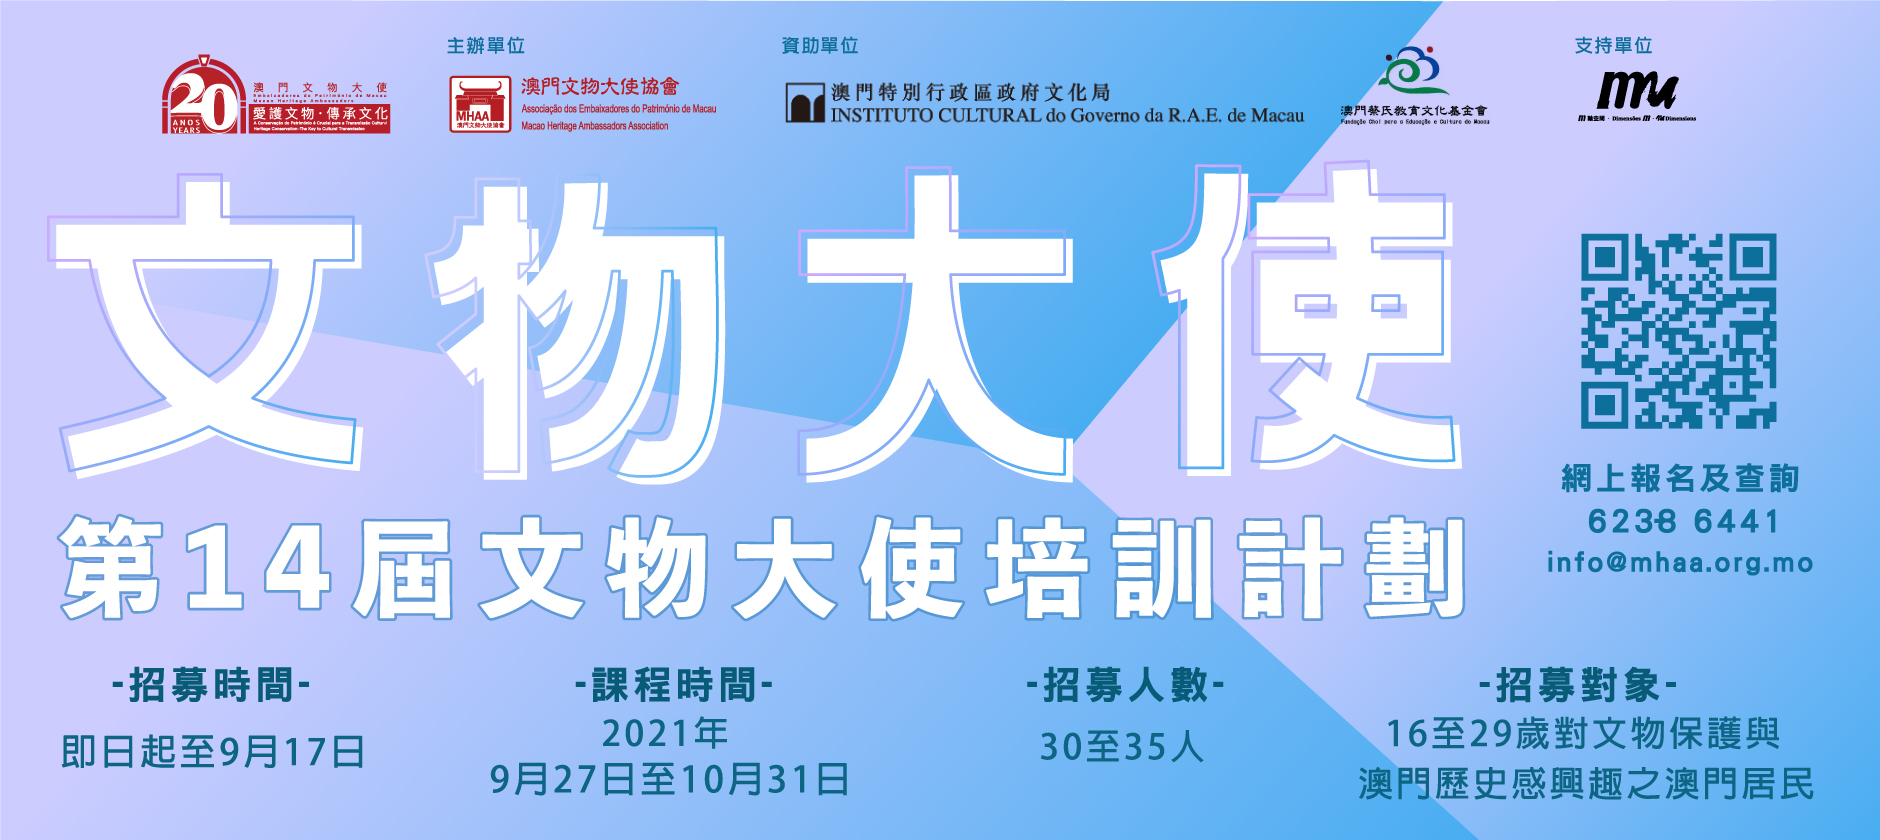 14屆招募-web-banner-04.jpg